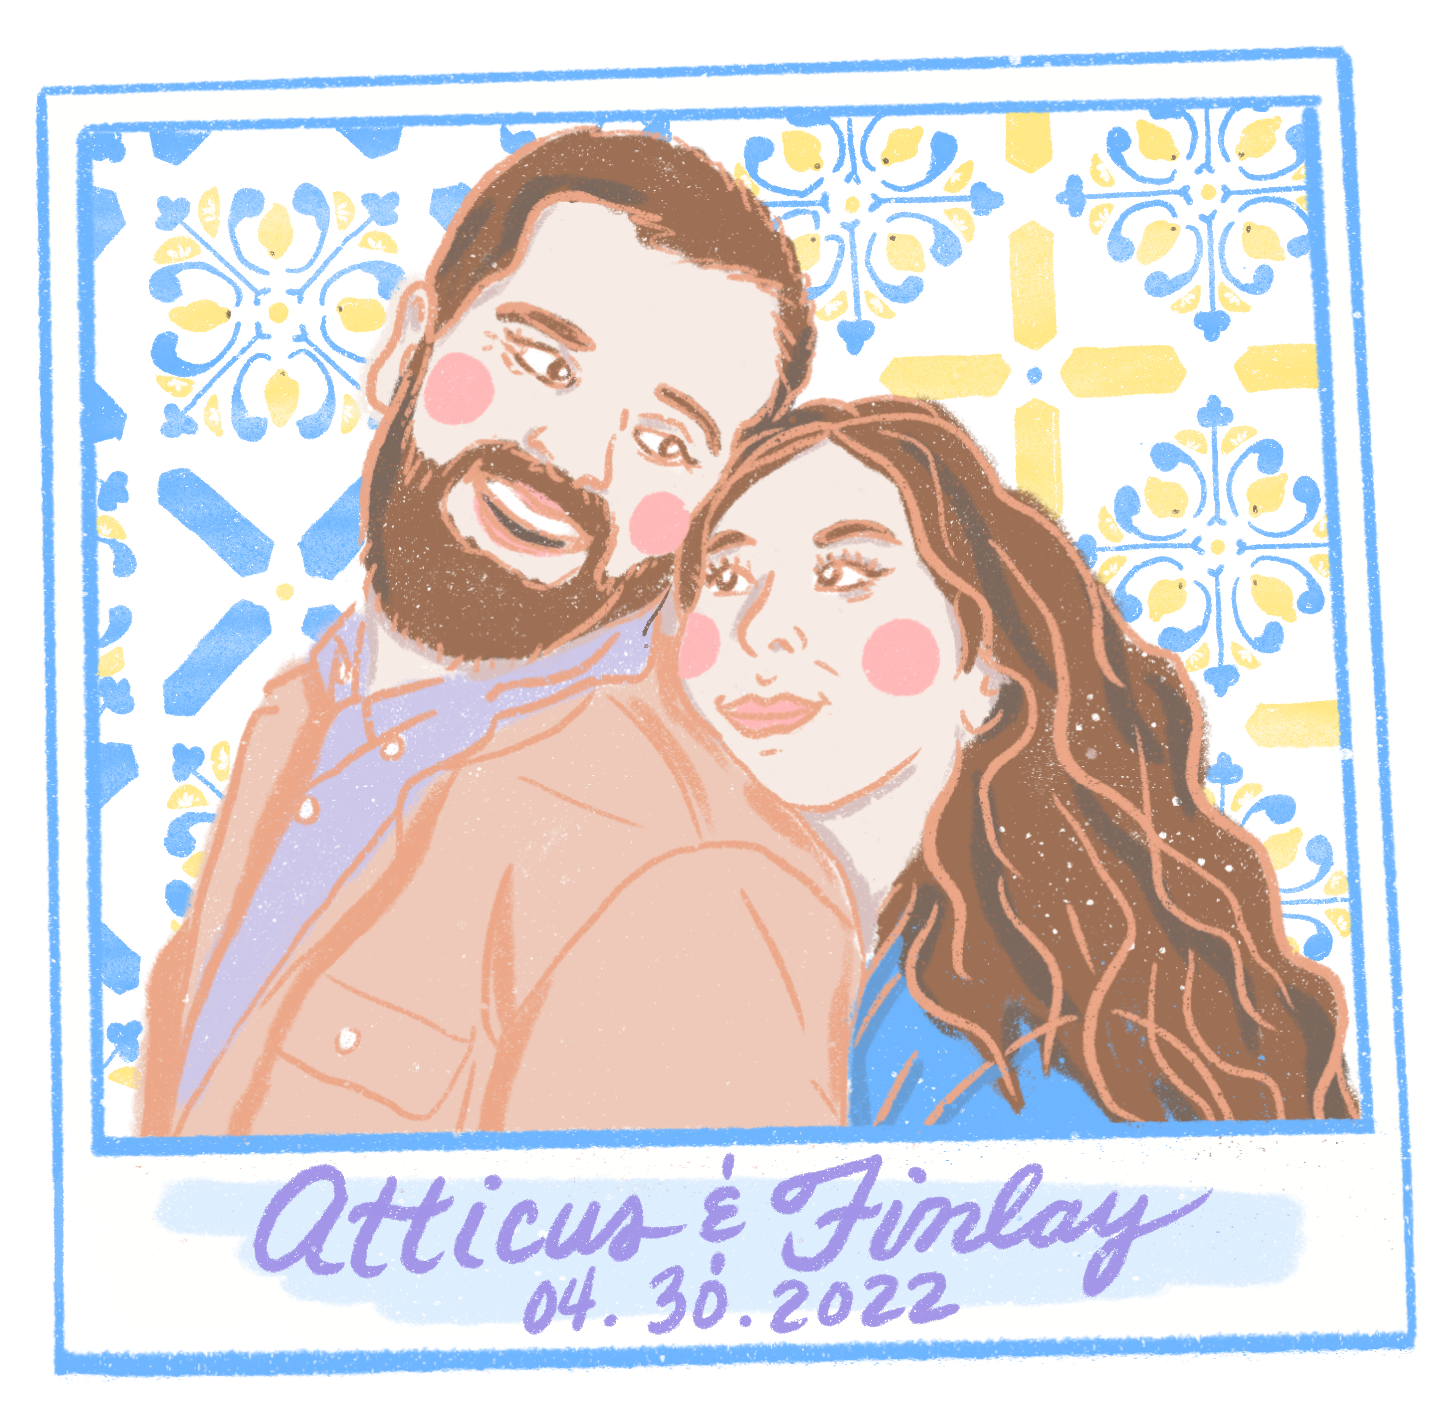 The Wedding Website of Atticus Blatt and Finlay Allardice